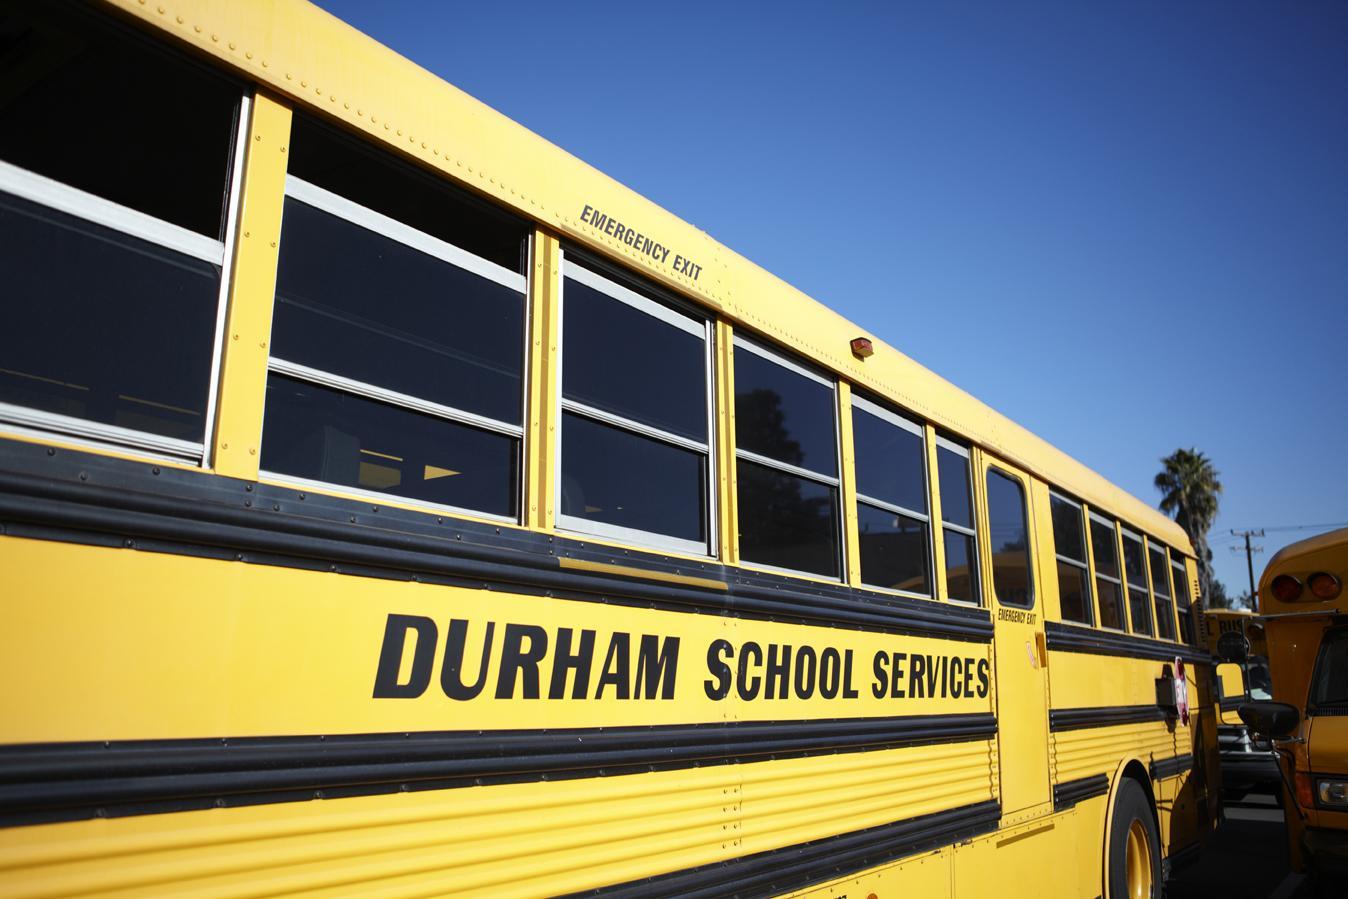 Durham School Services (1998 Acq)